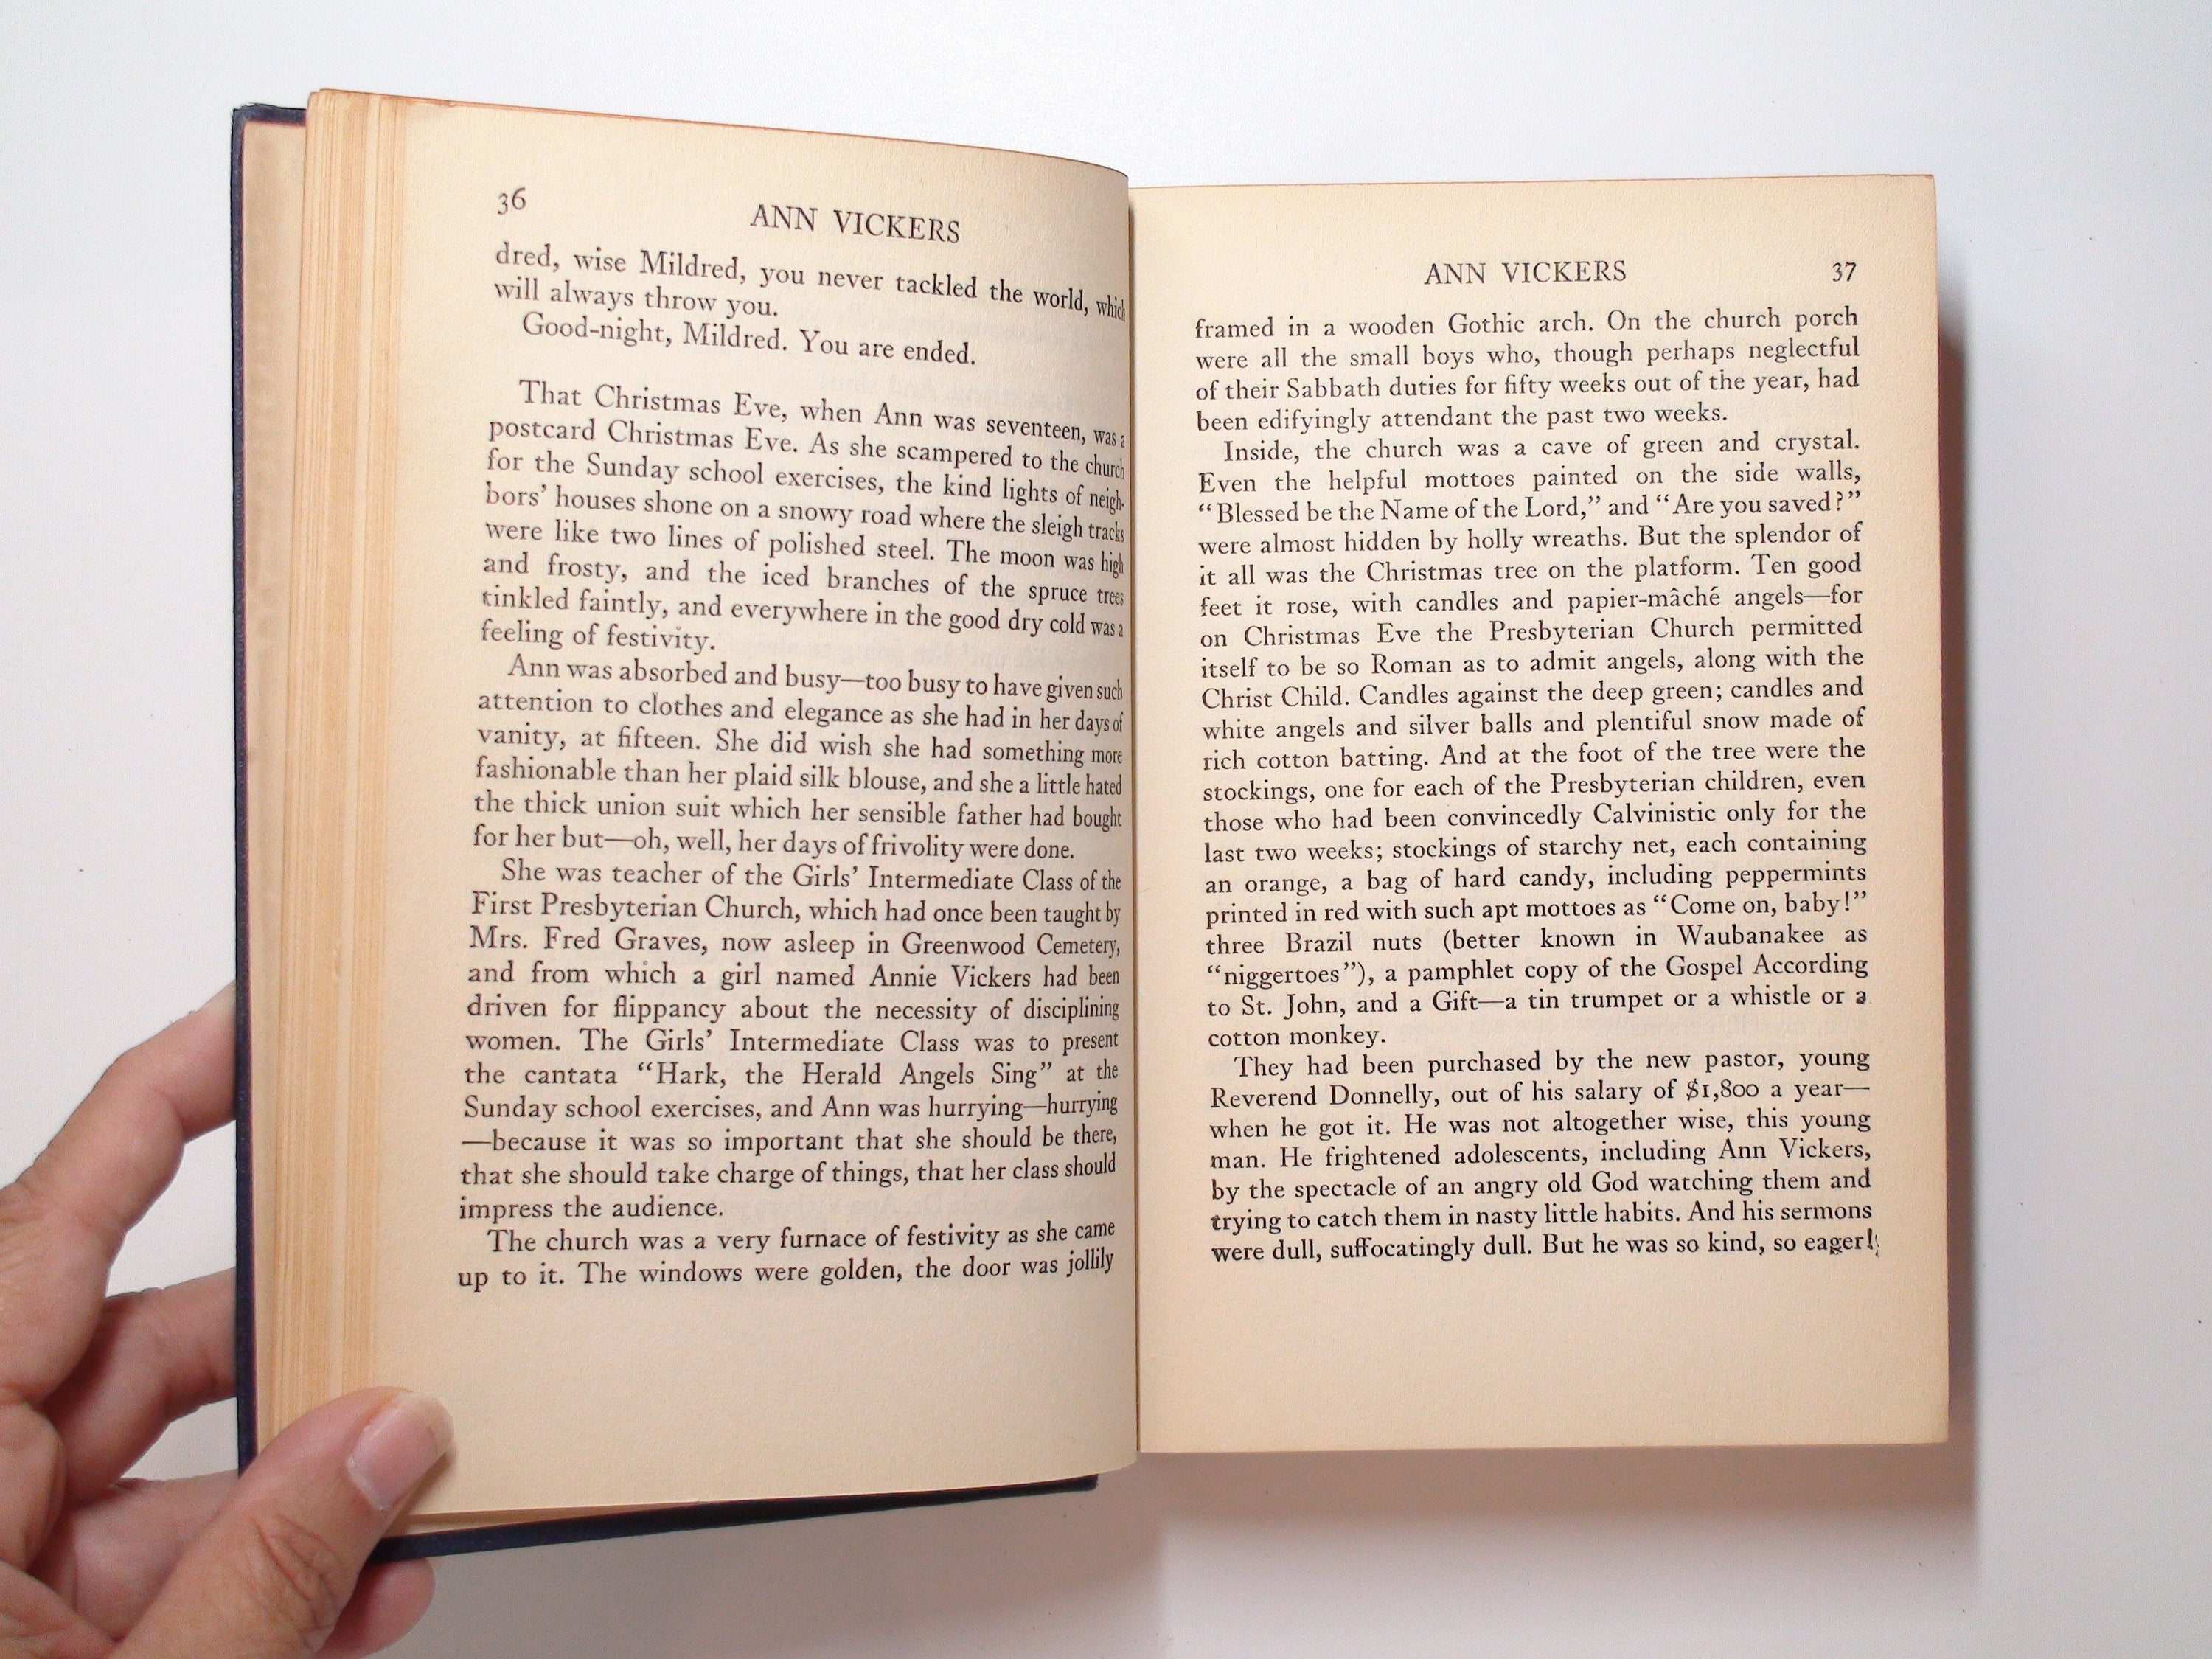 Ann Vickers by Sinclair Lewis, Grosset & Dunlap, 1st Ed, 1933